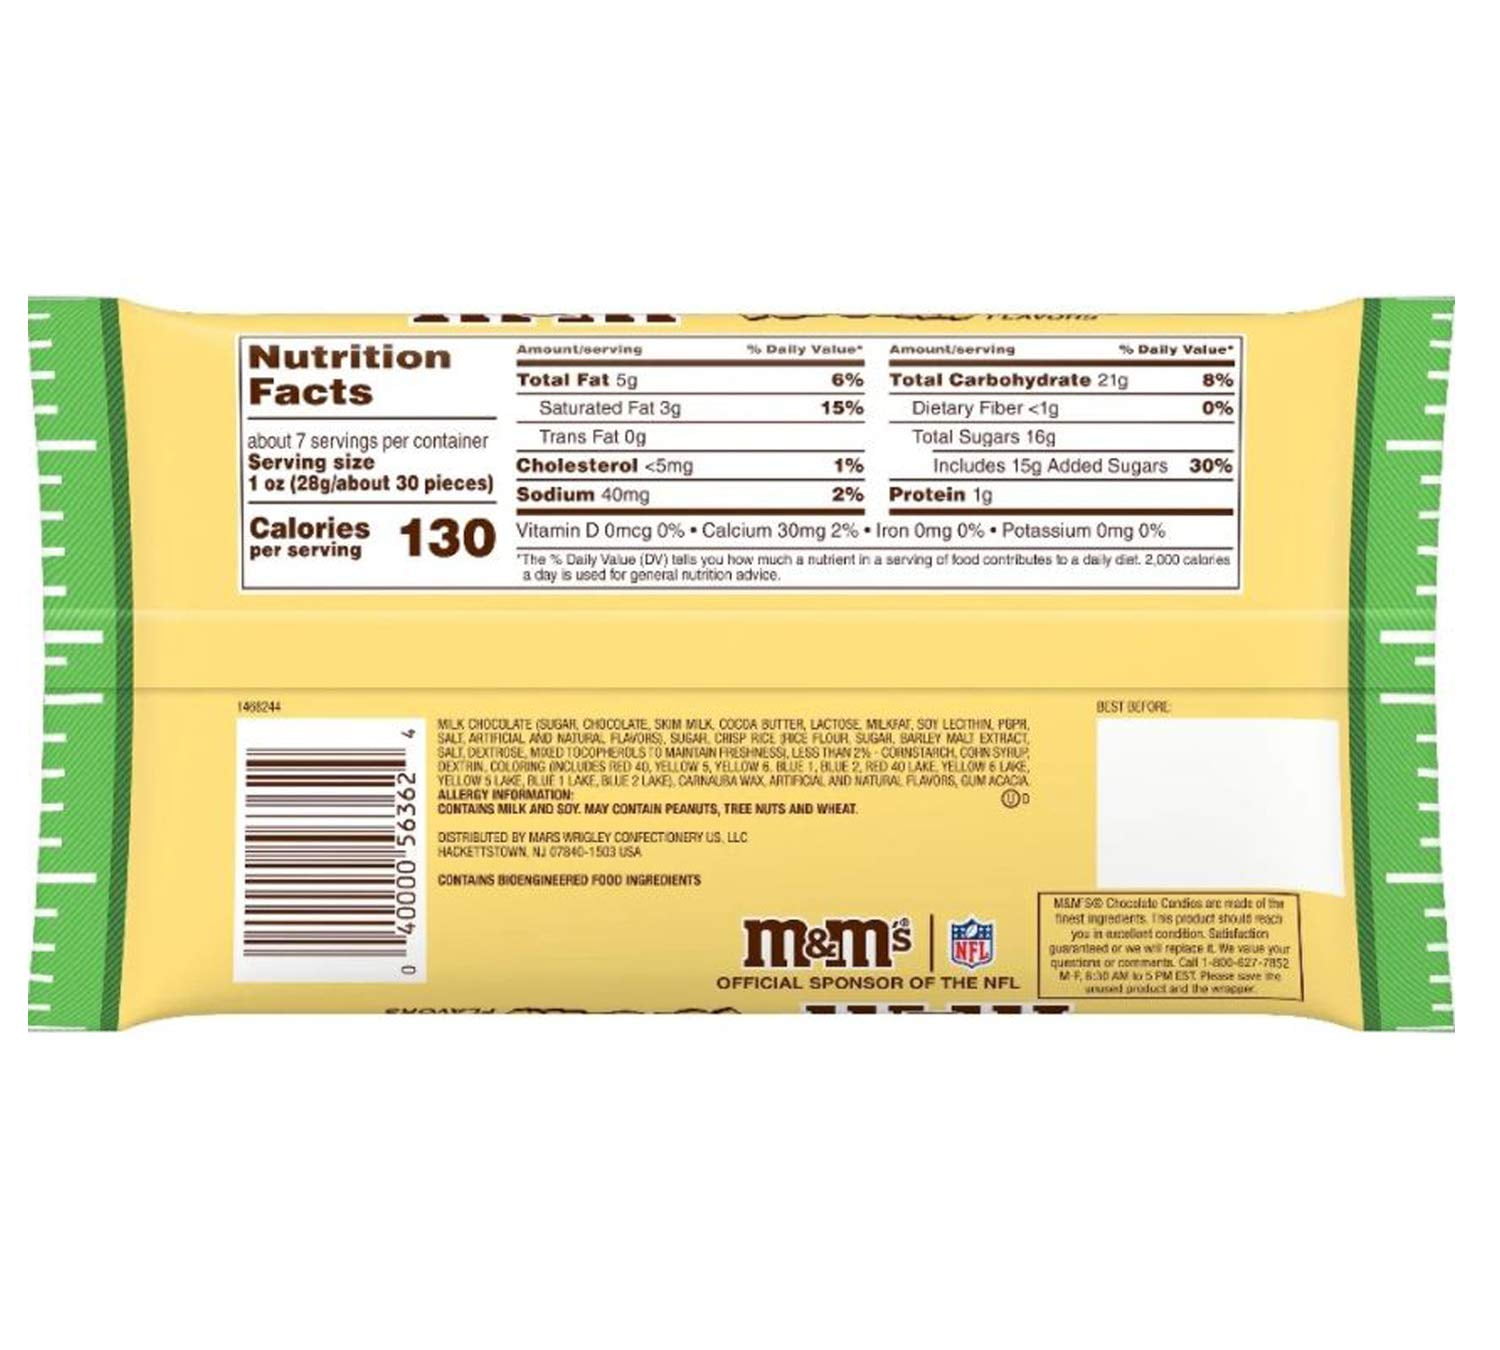 M&M Crispy Bag 45G – MyJam Food